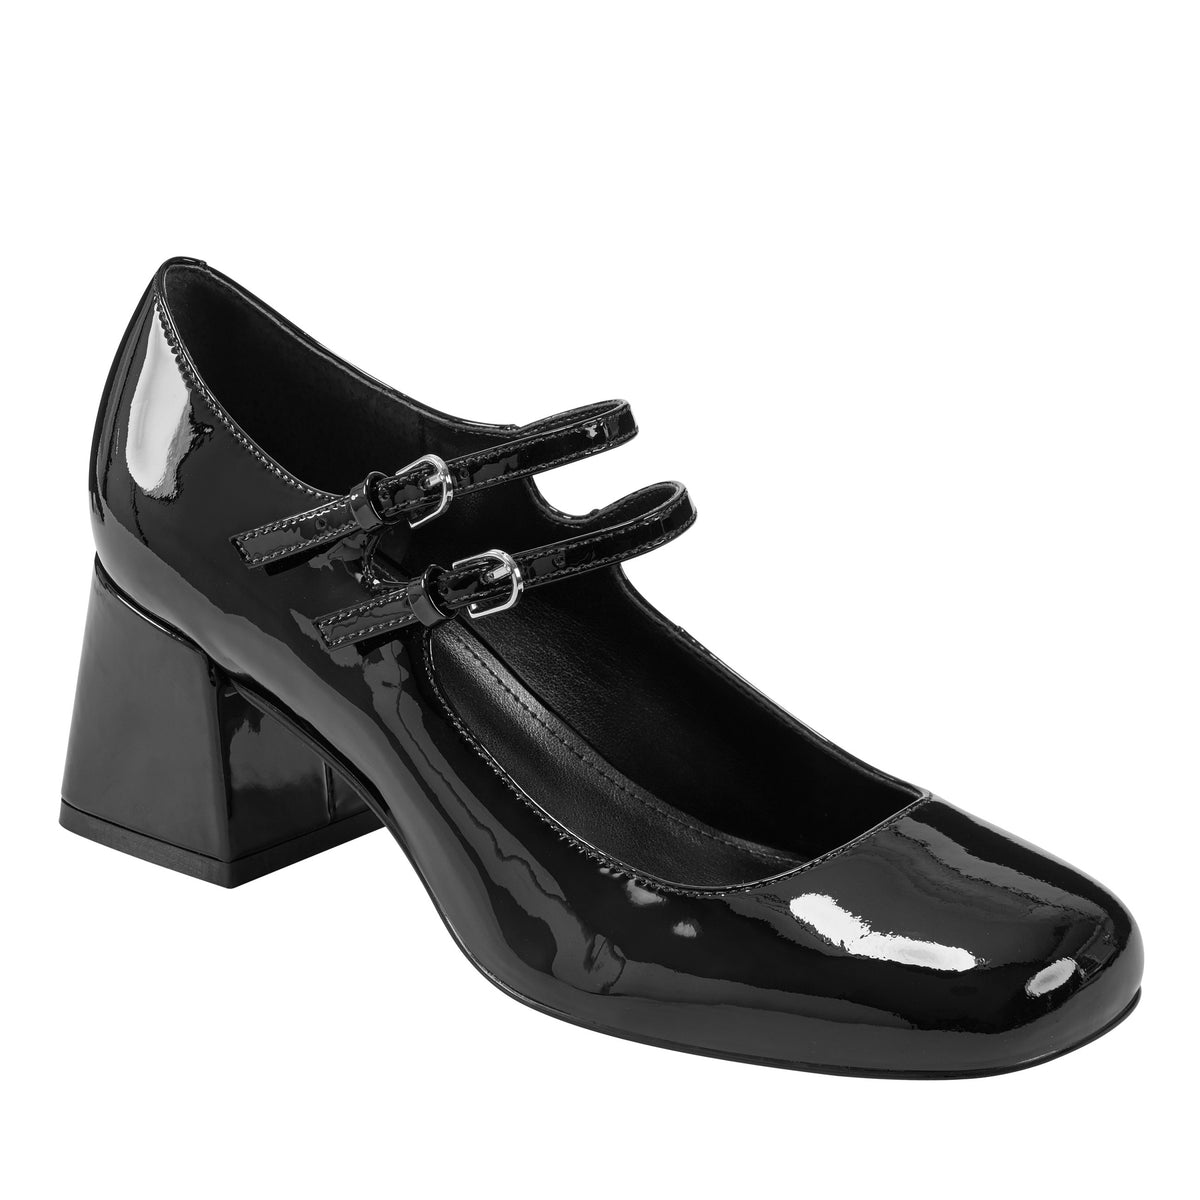 Dr Janes Black|elegant Brown Patent Leather Mary Jane Pumps - High Heel  Square Toe